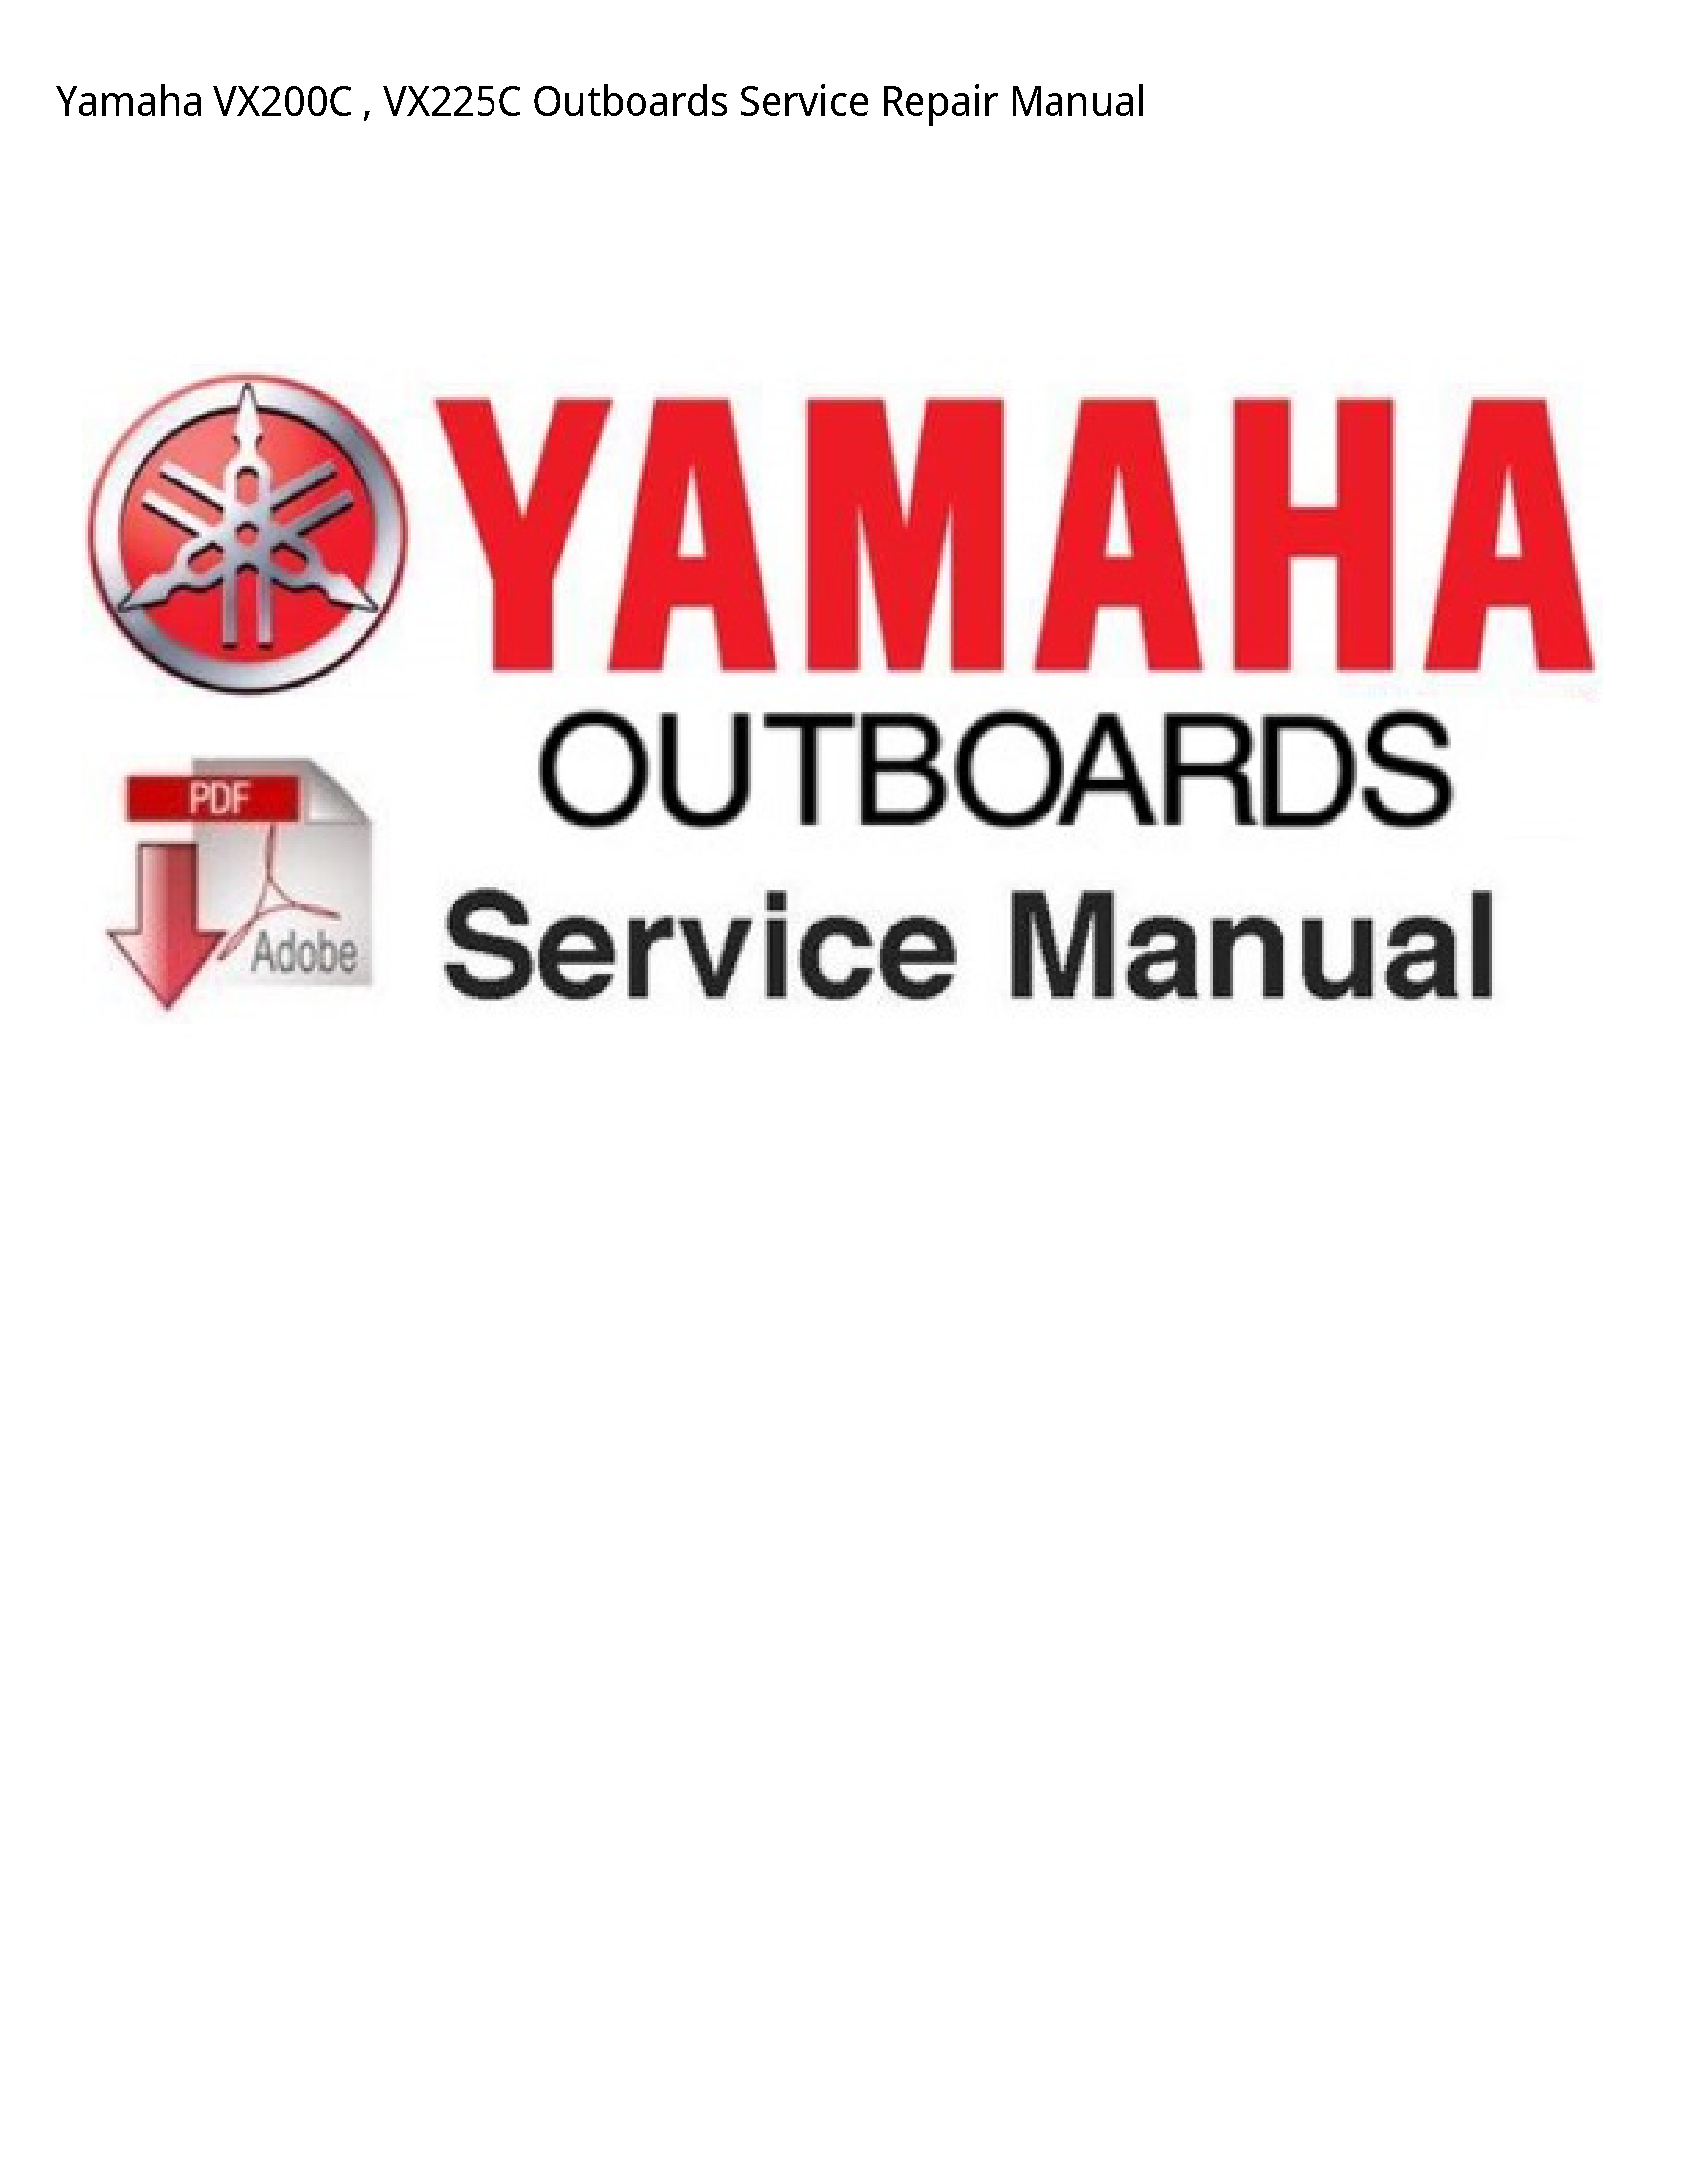 Yamaha VX200C Outboards manual